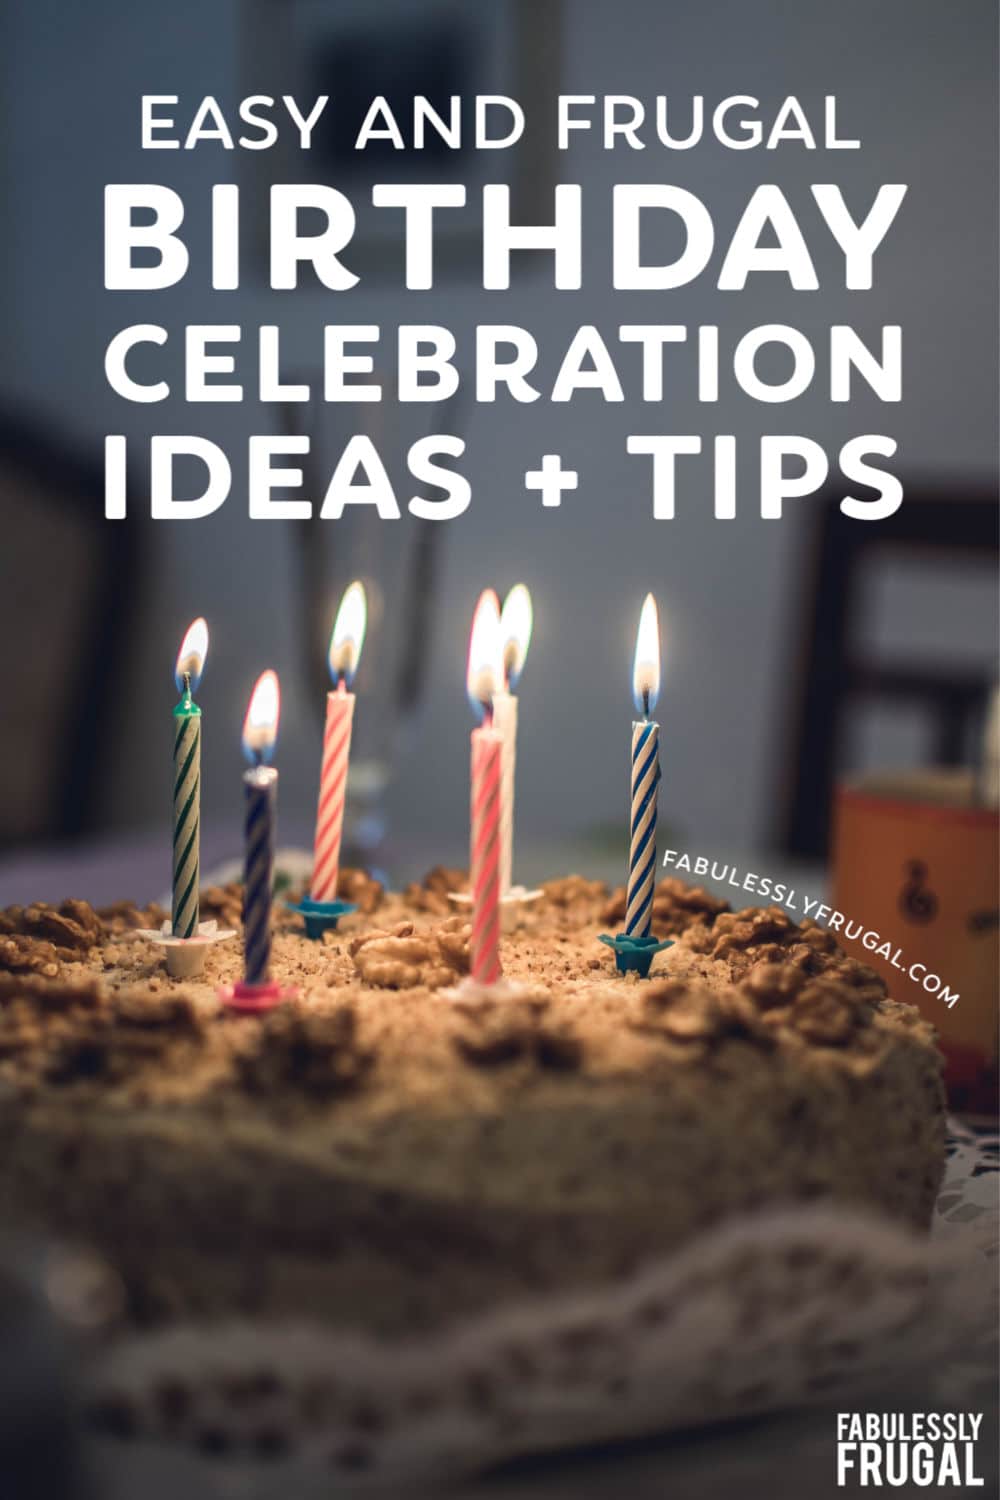 Easy birthday celebration ideas